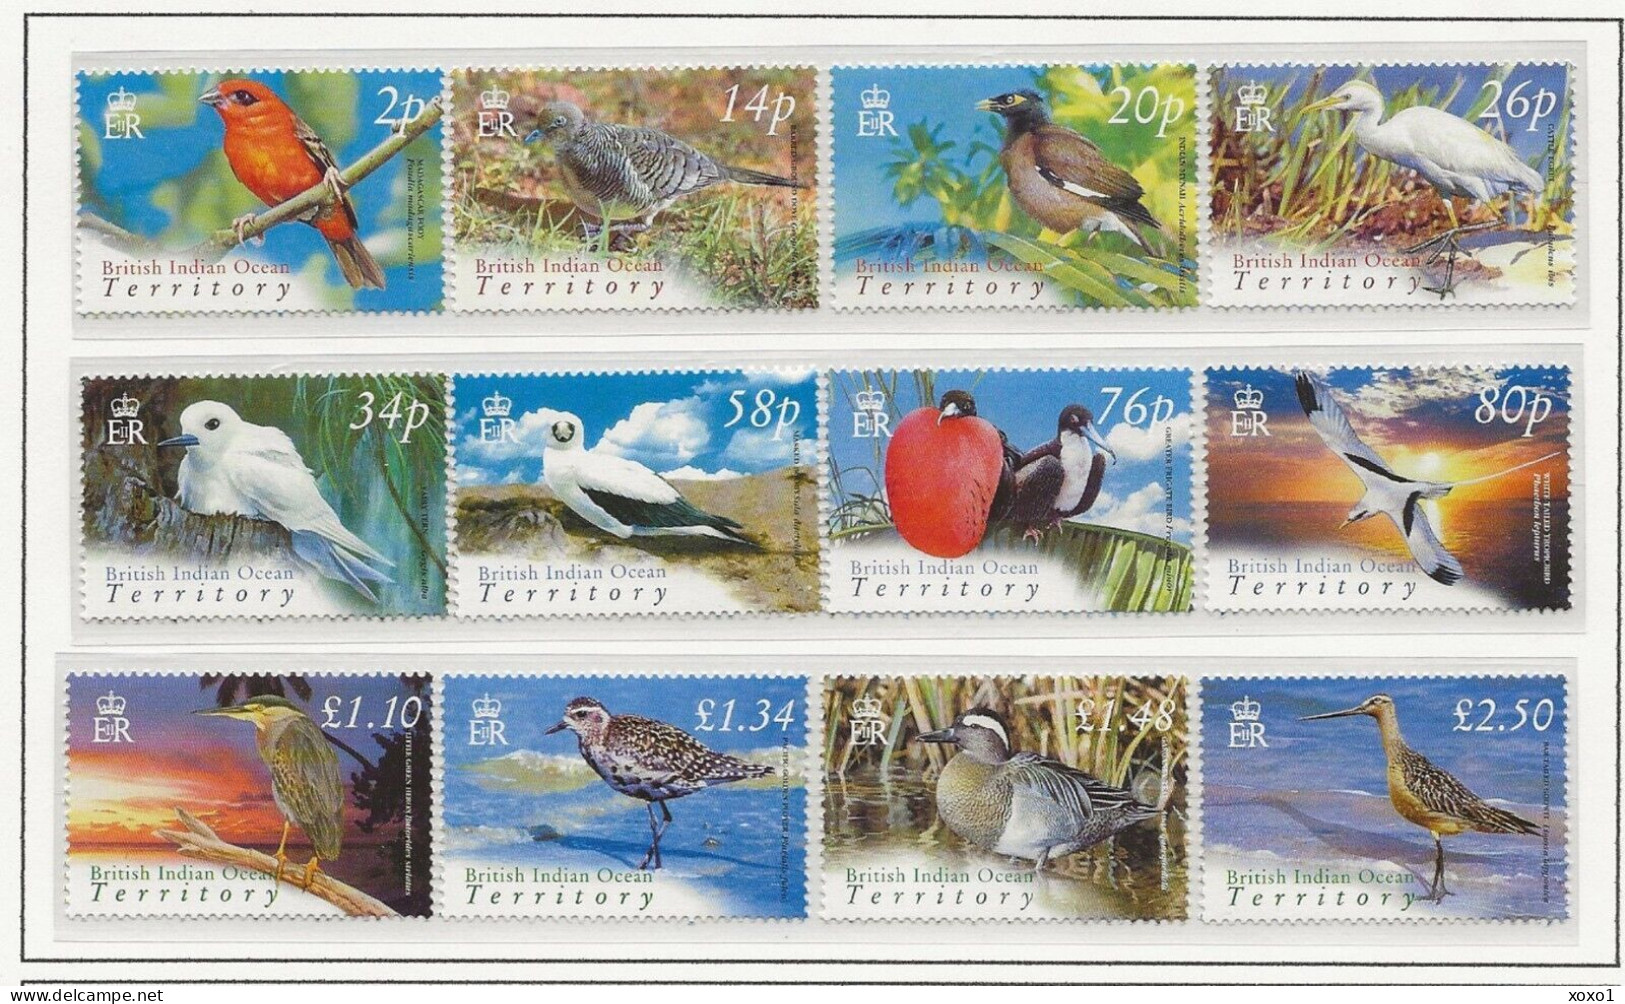 BIOT 2004 MiNr. 340 - 351   Birds  12 V   MNH ** 35.00 € - British Indian Ocean Territory (BIOT)